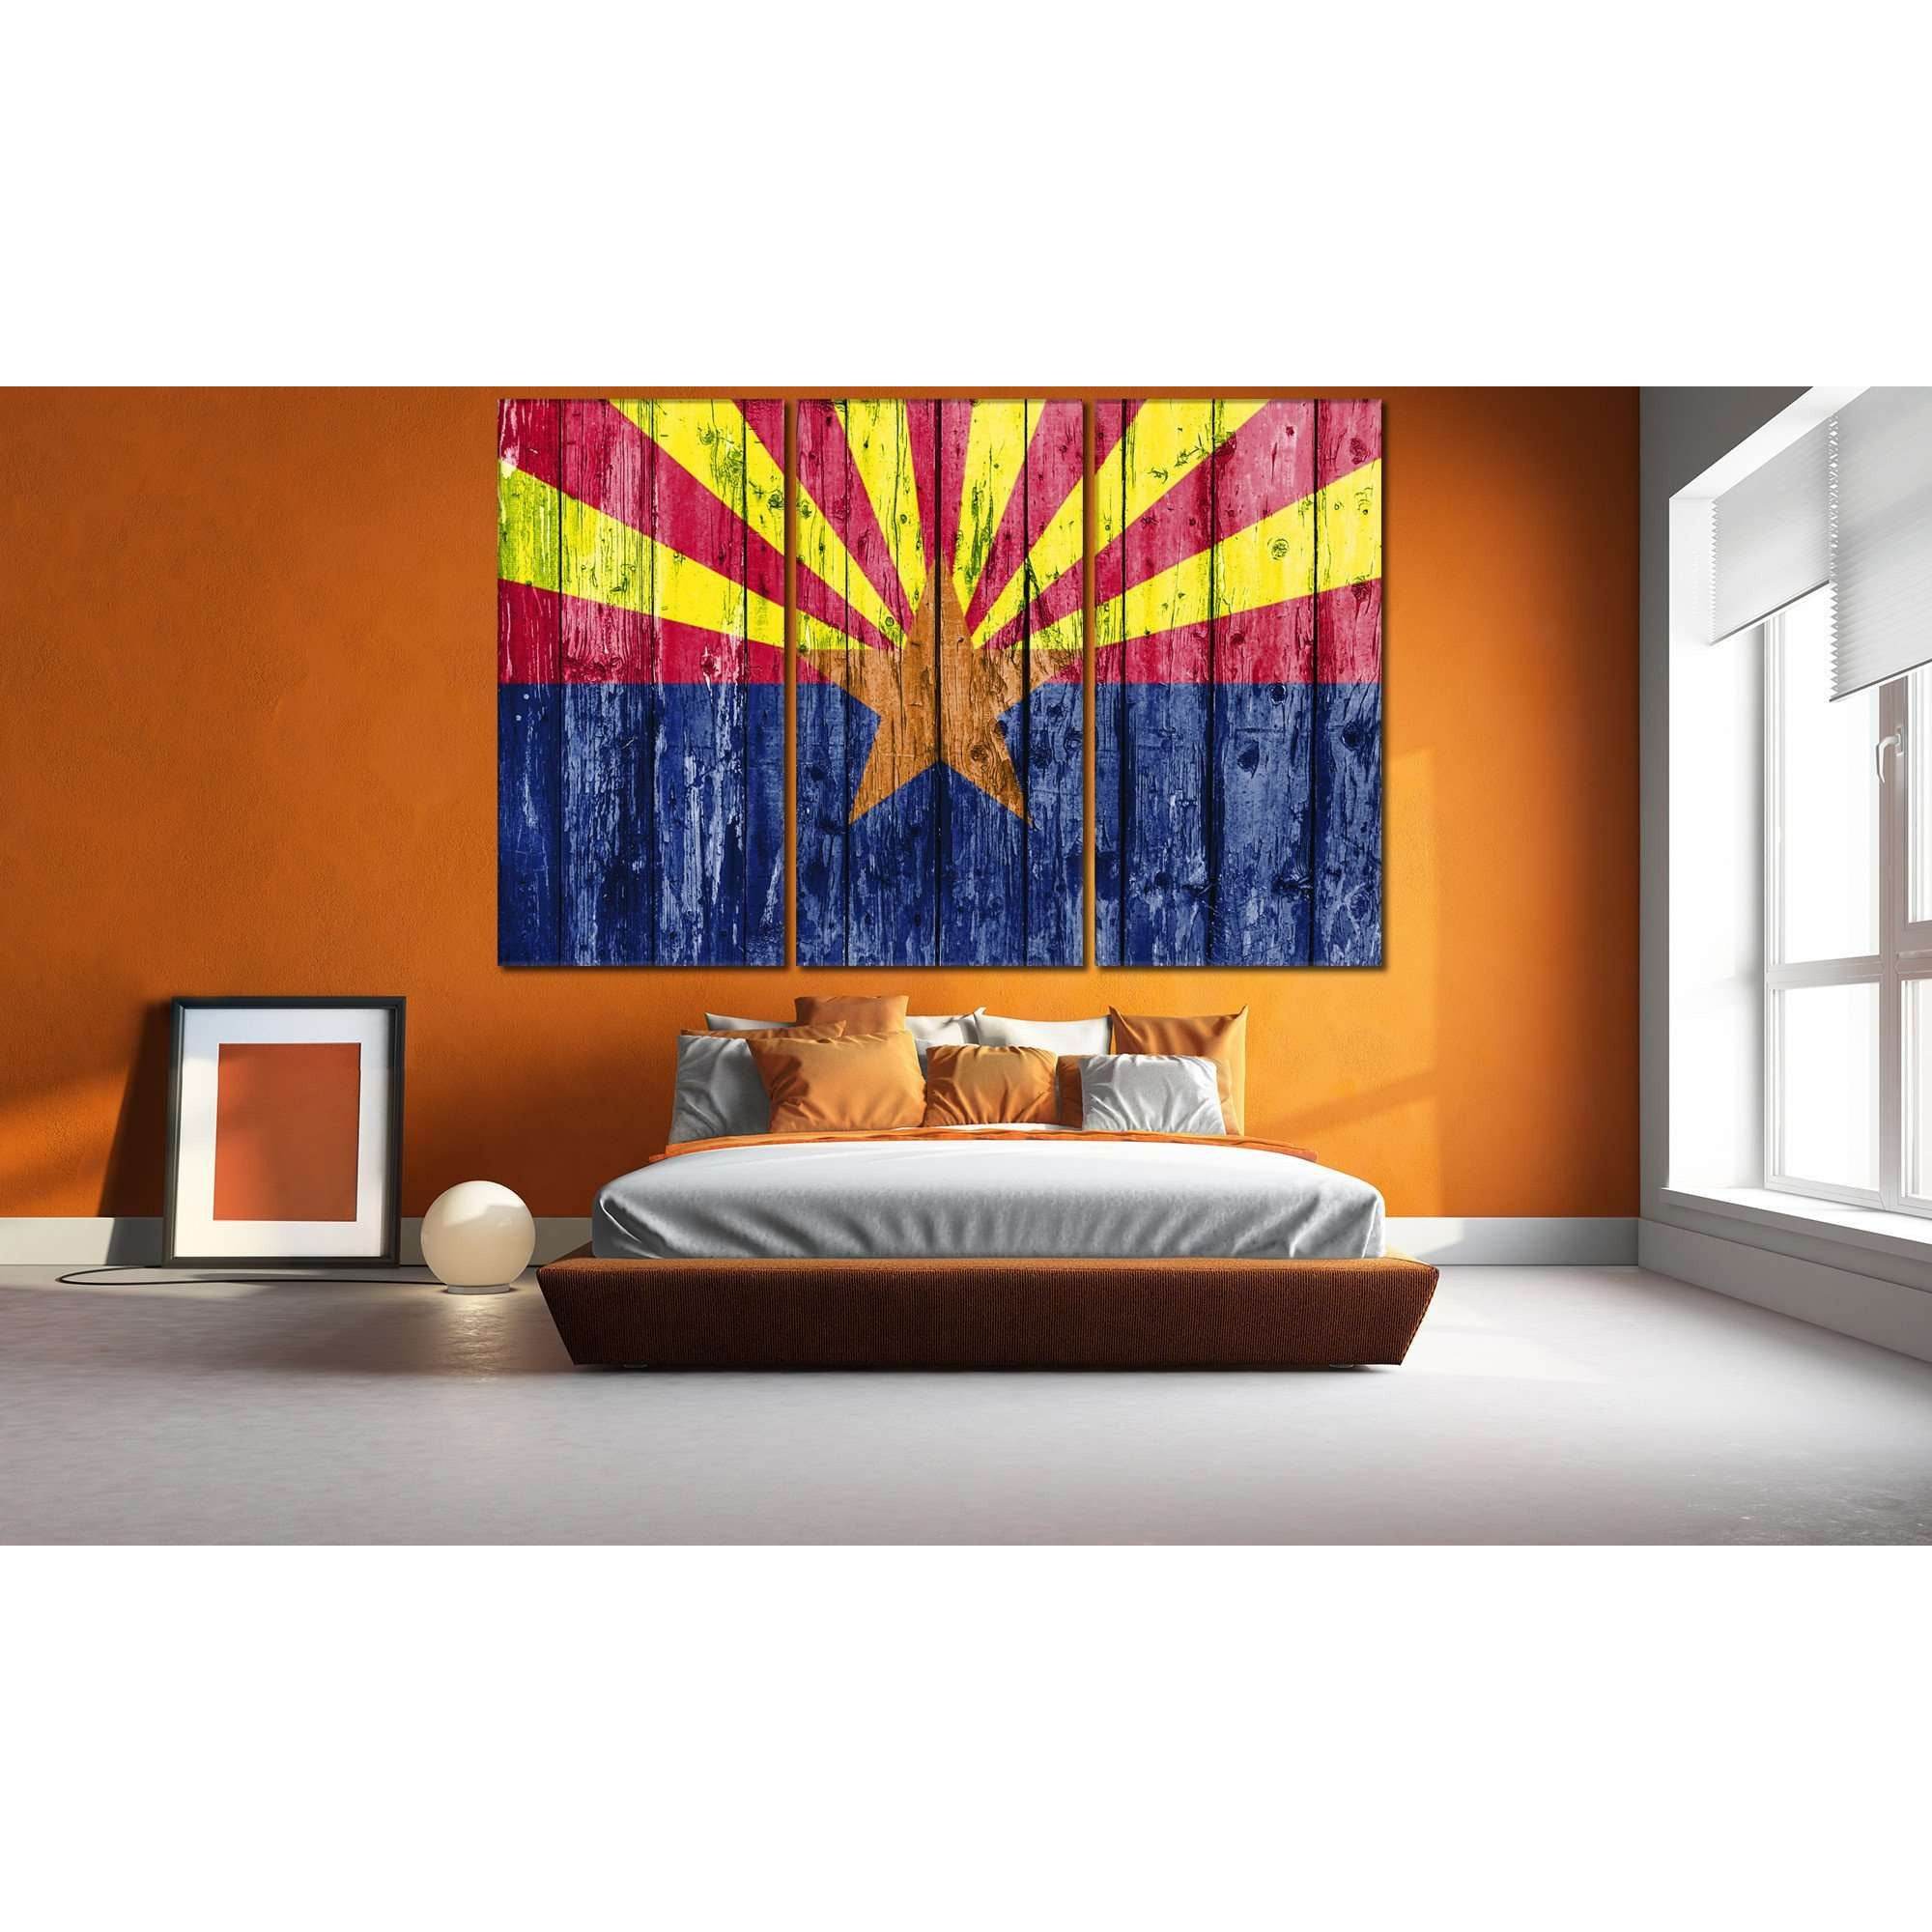 Flag of Arizona №834 Ready to Hang Canvas Print